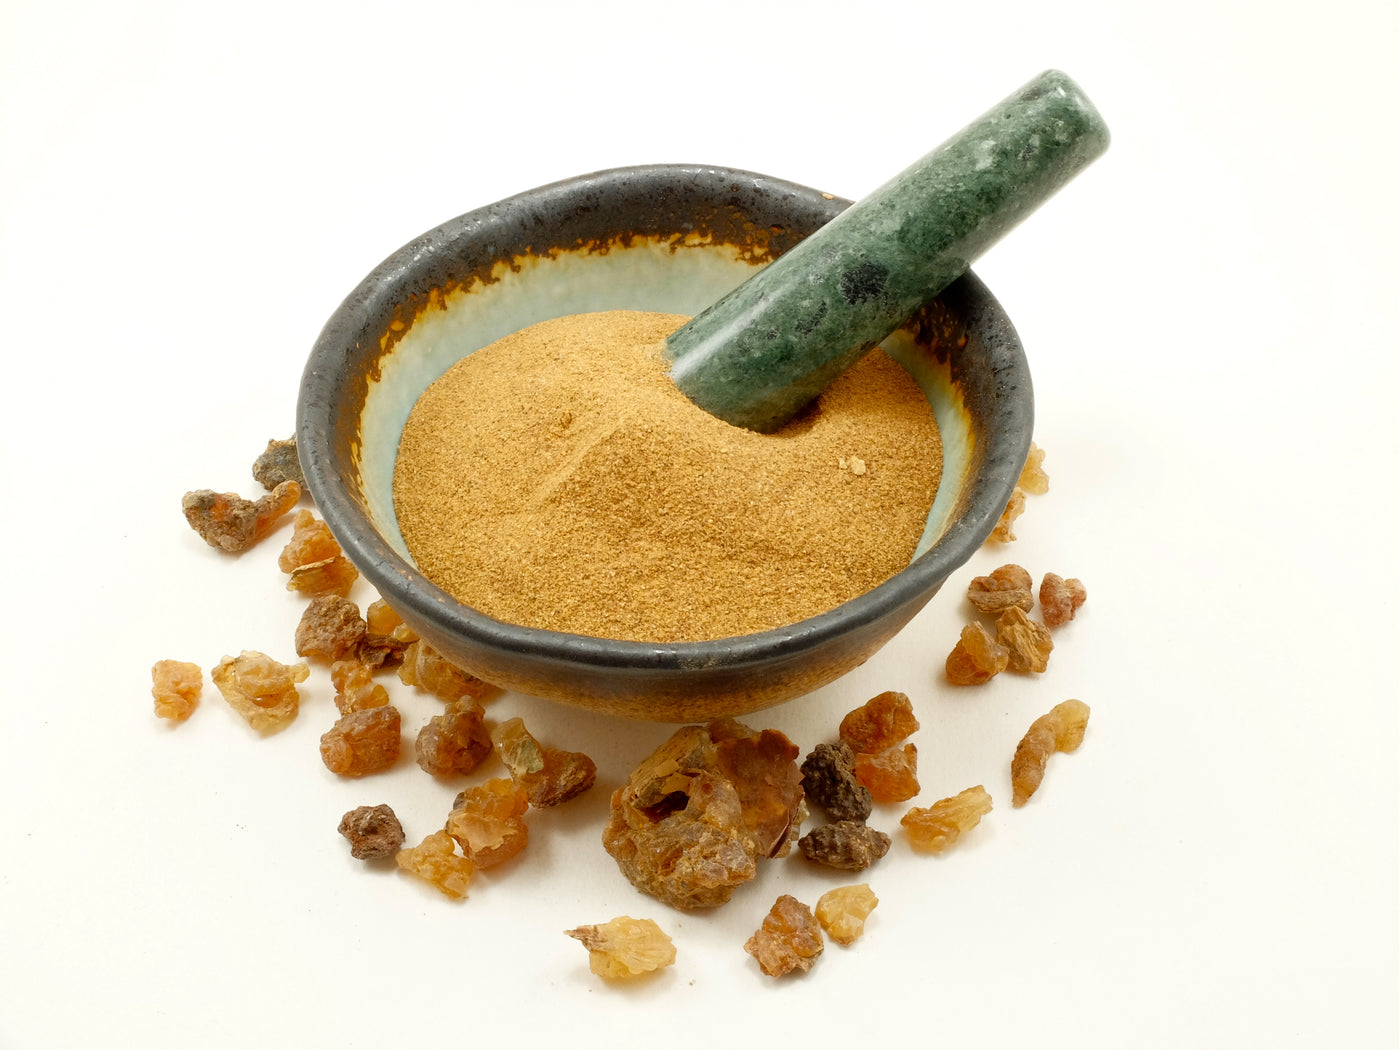 Myrrh Gum Powder 0.5 oz - GW Ceremonial Herbs